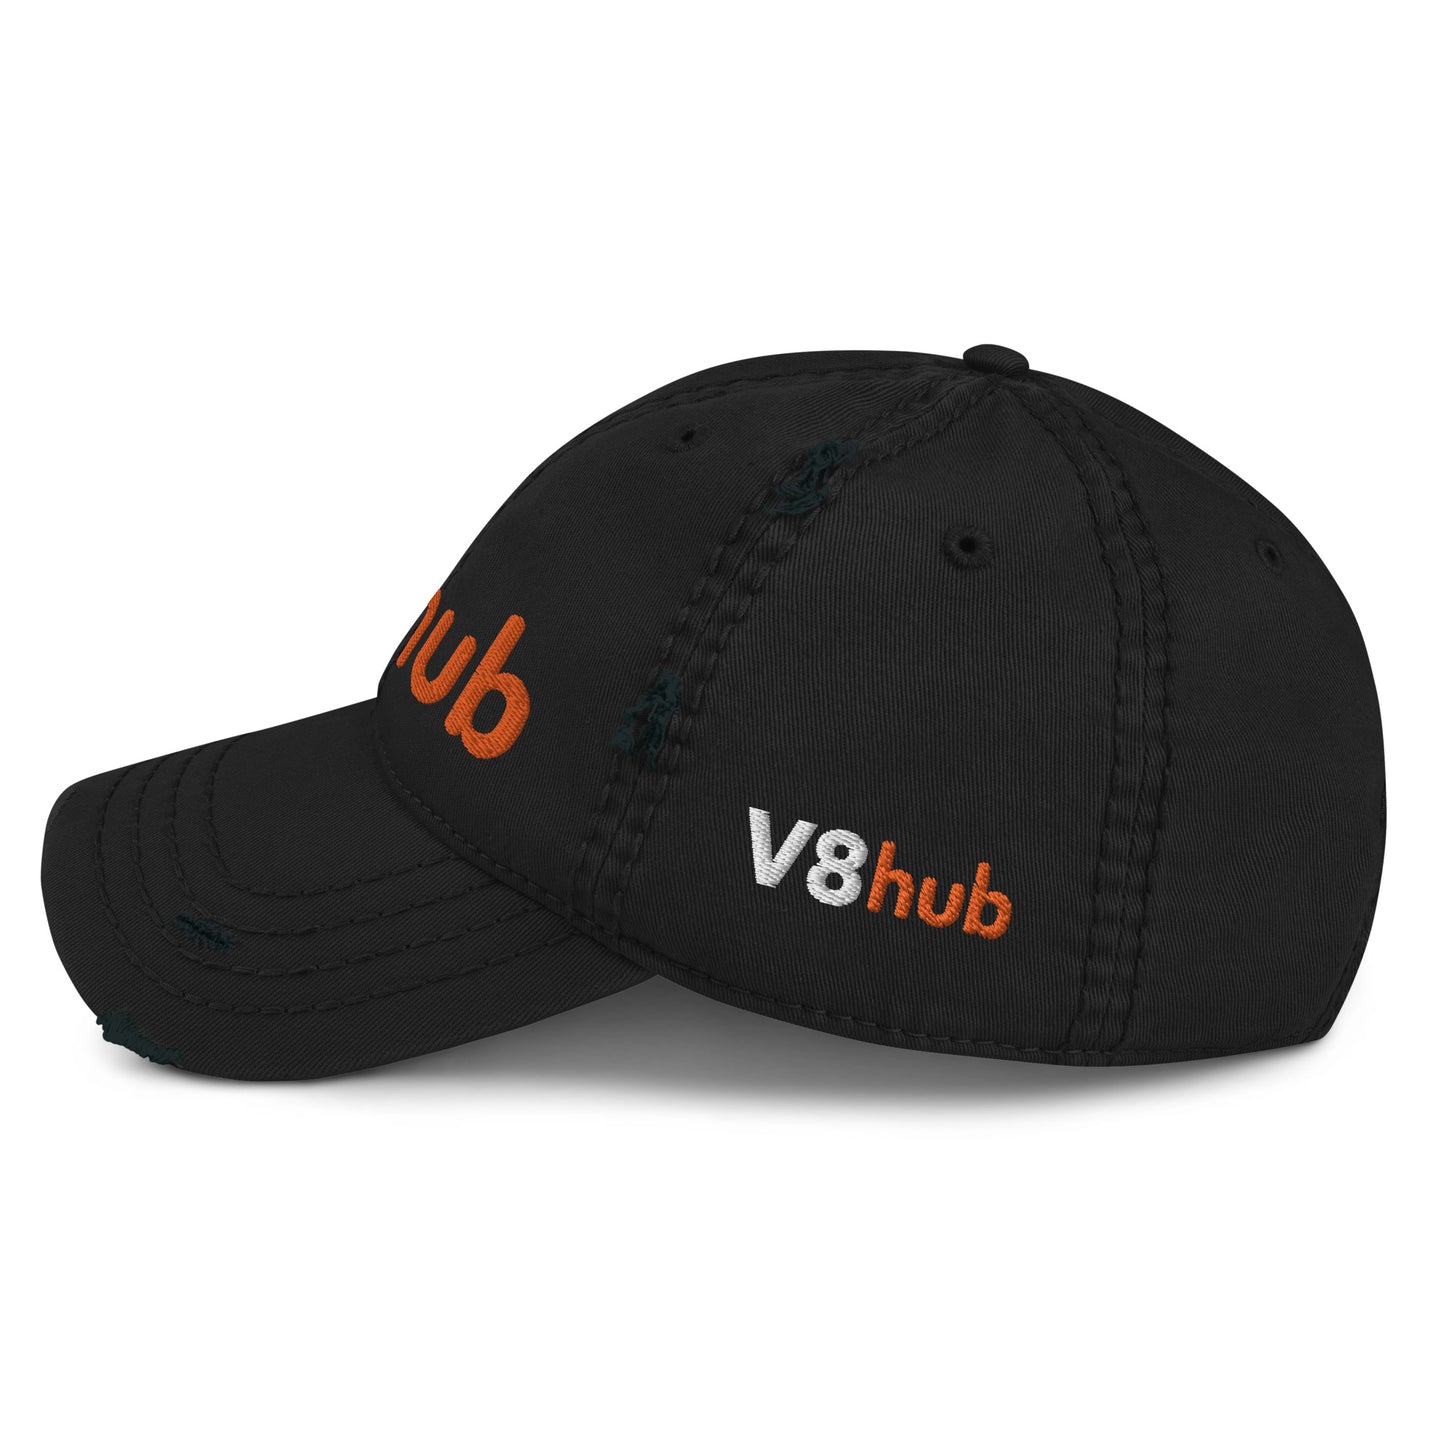 V8hub Cap im Used-Look black